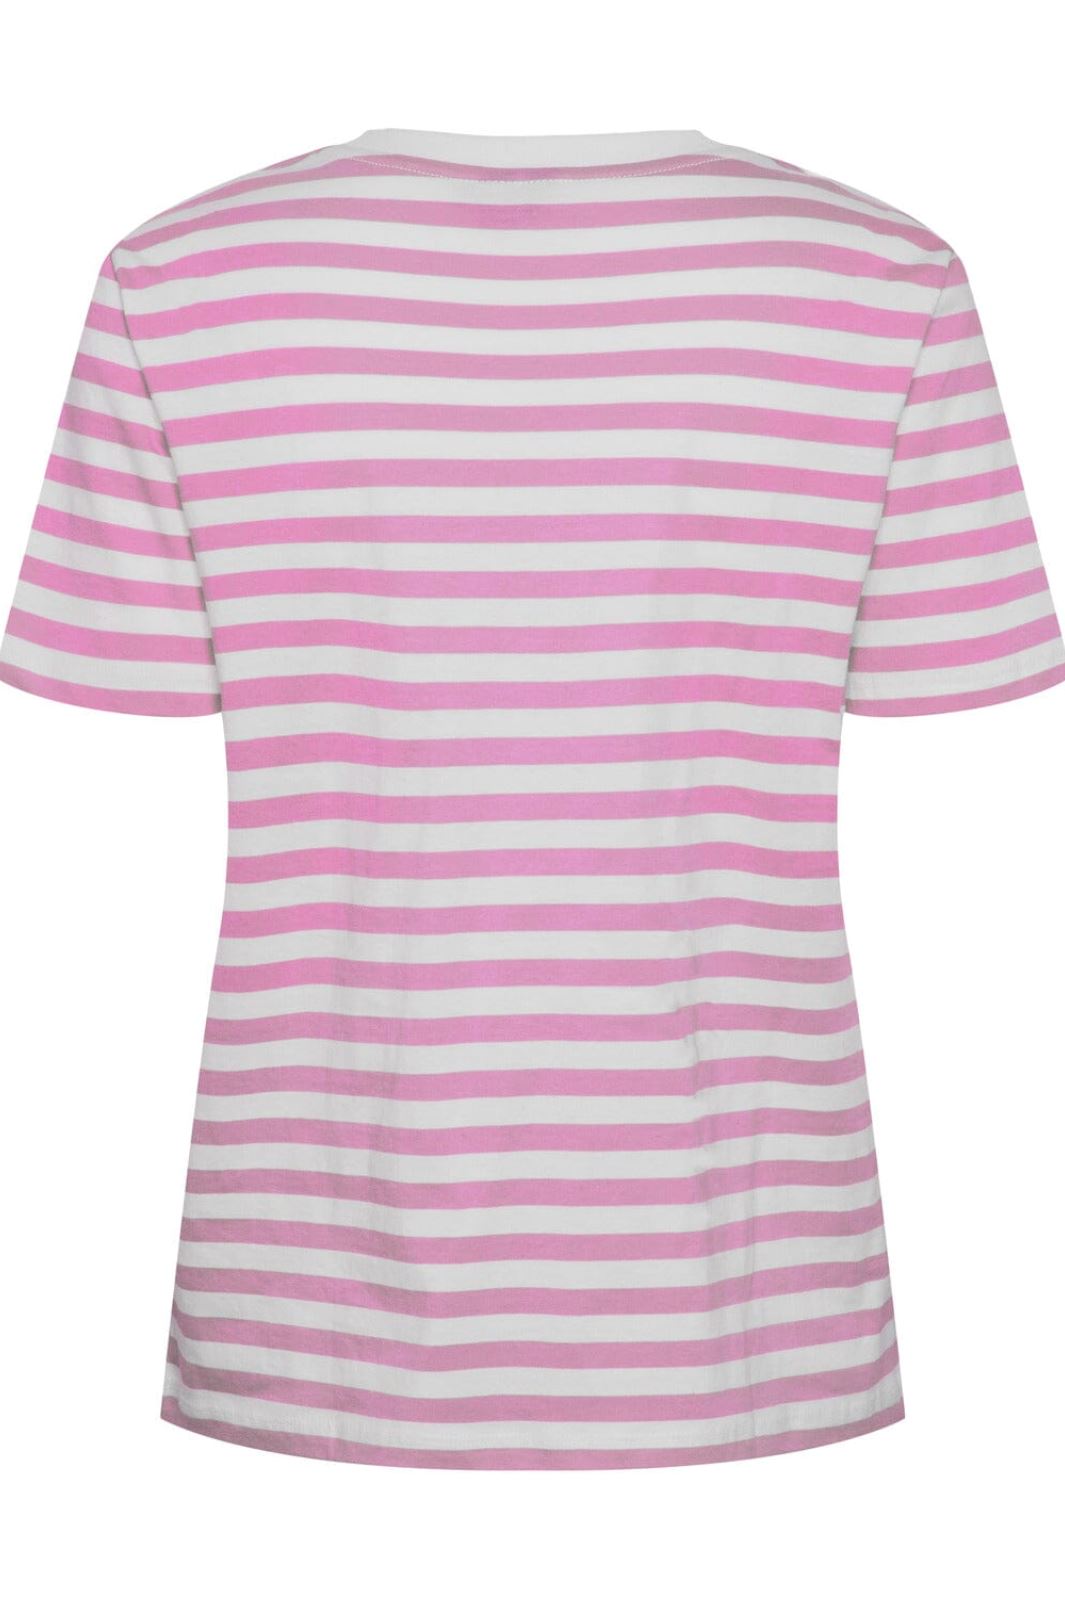 Pieces - Pcria Ss Tee Stripes - 4474679 Pastel Lavender Bright White T-shirts 